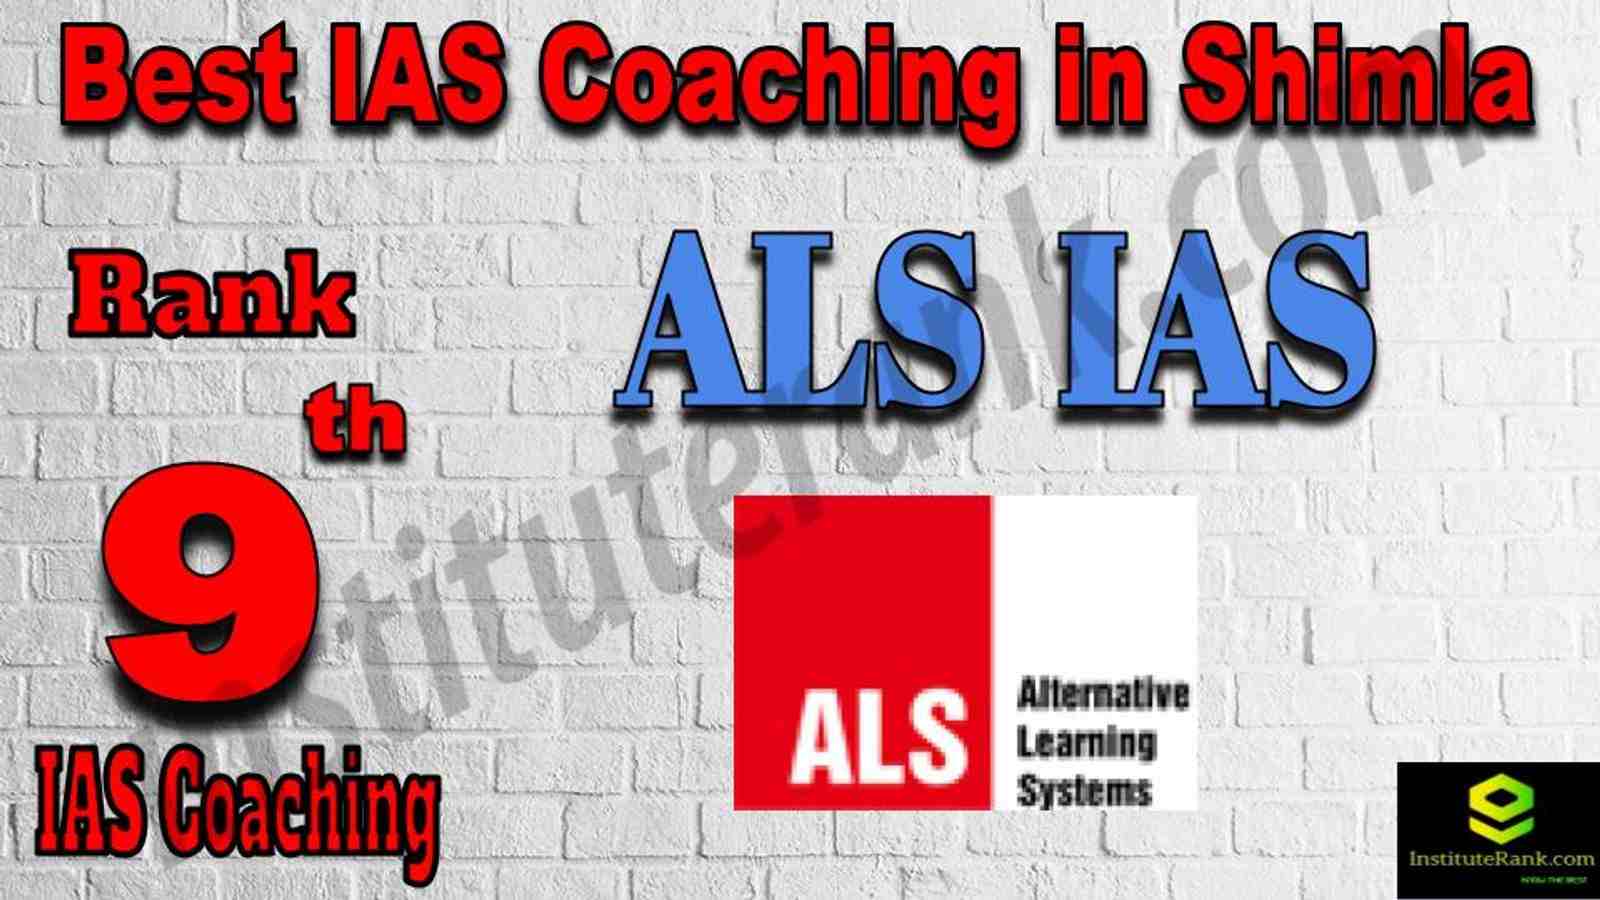 9th Best IAS Coaching in Shimla